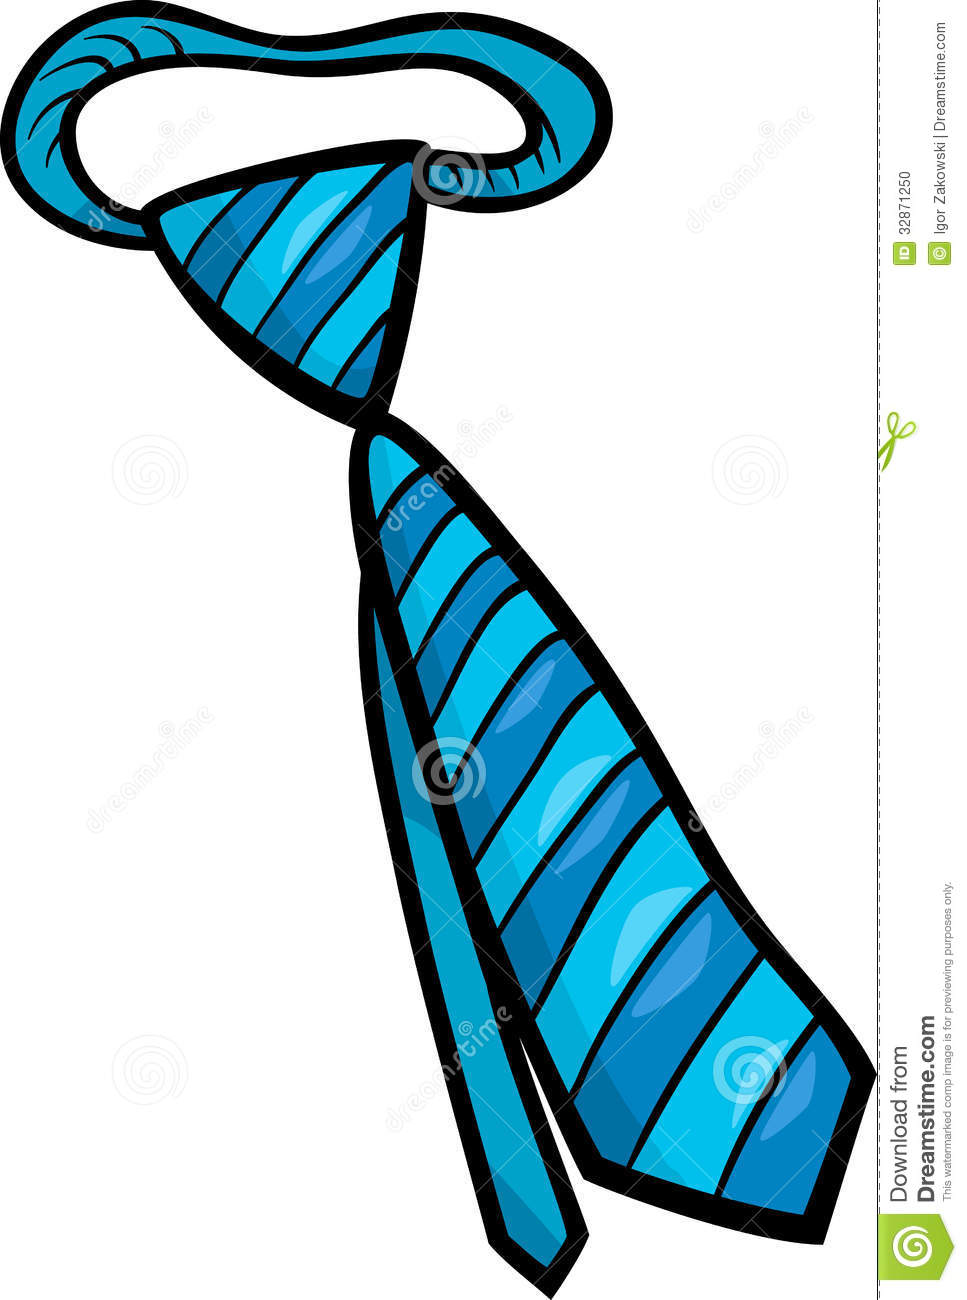 Necktie Clip Art Cartoon Illustration Stock Photo   Image  32871250